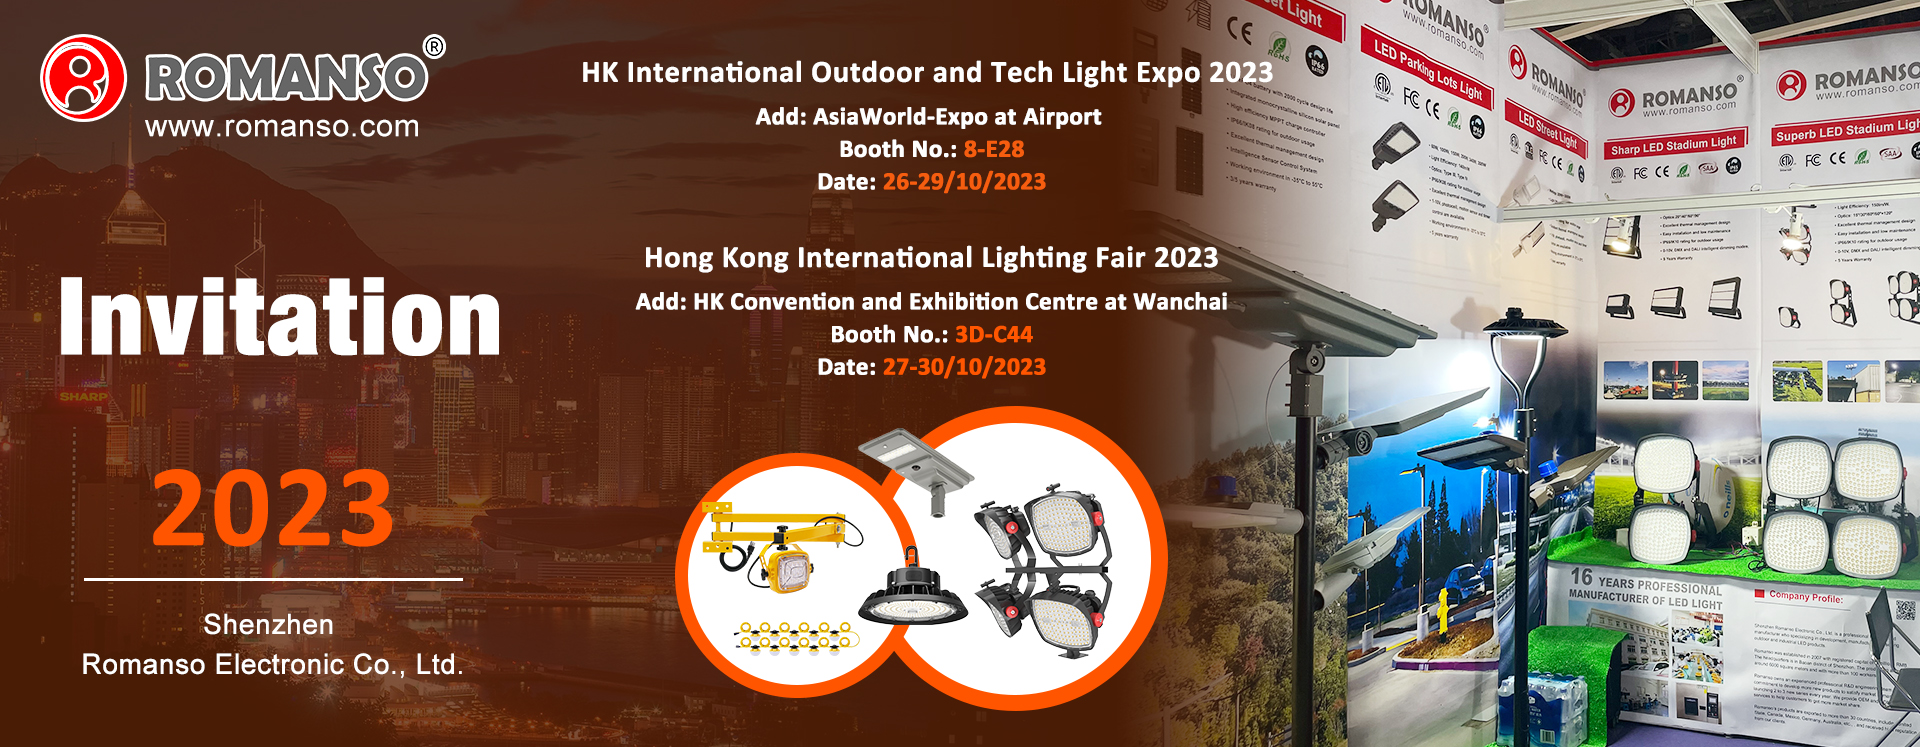 Romanso 2023 Hong Kong Lighting Fair Invitations